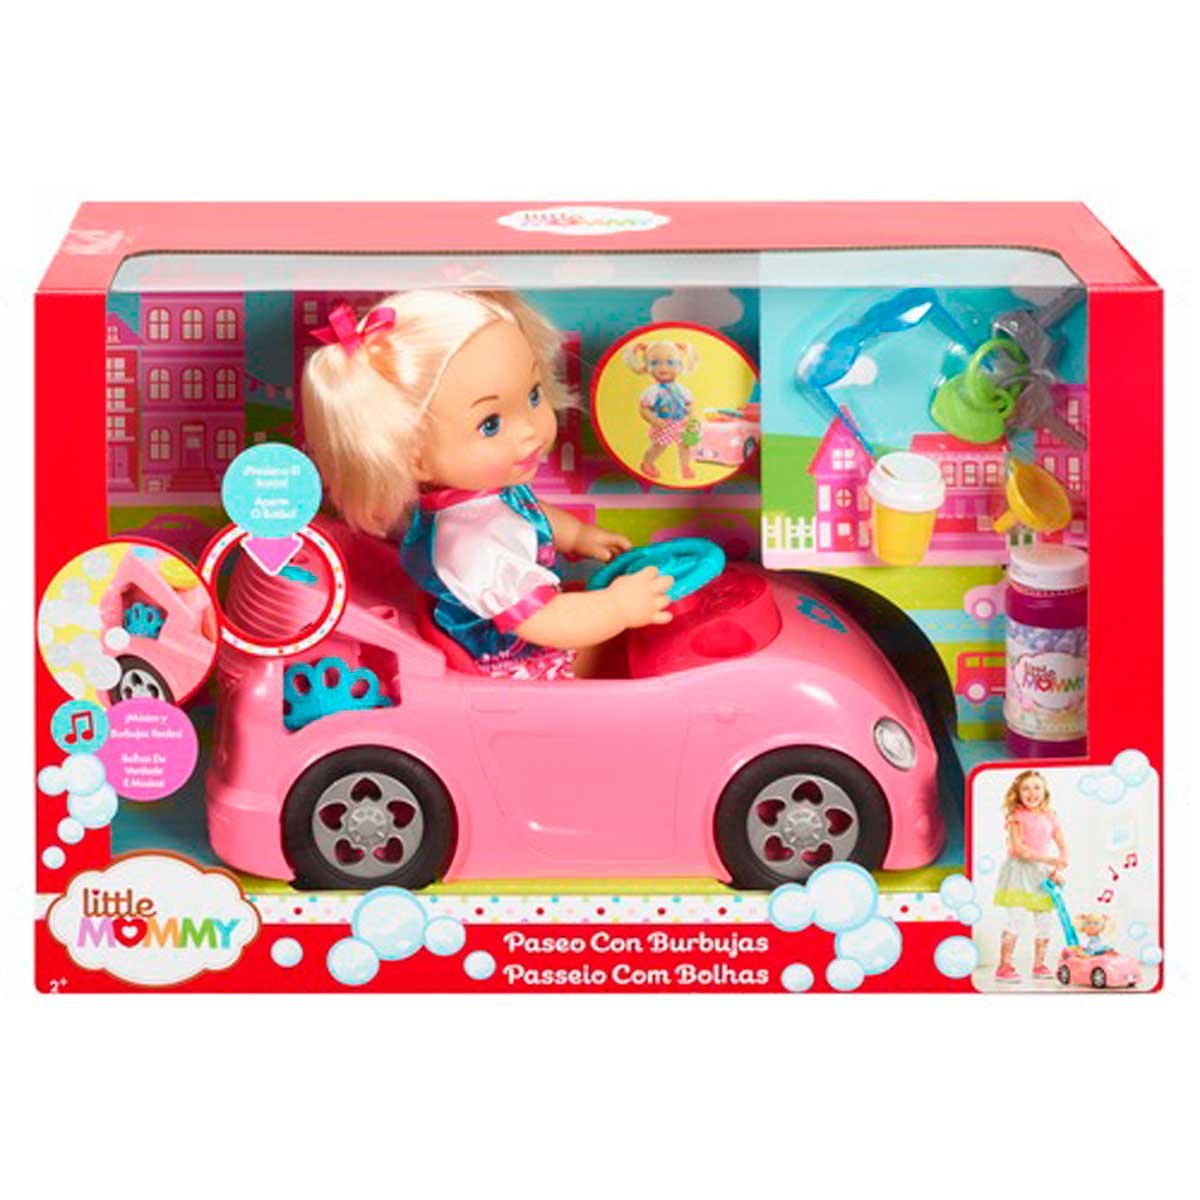 Little Mommy Paseo con Burbujas Mattel